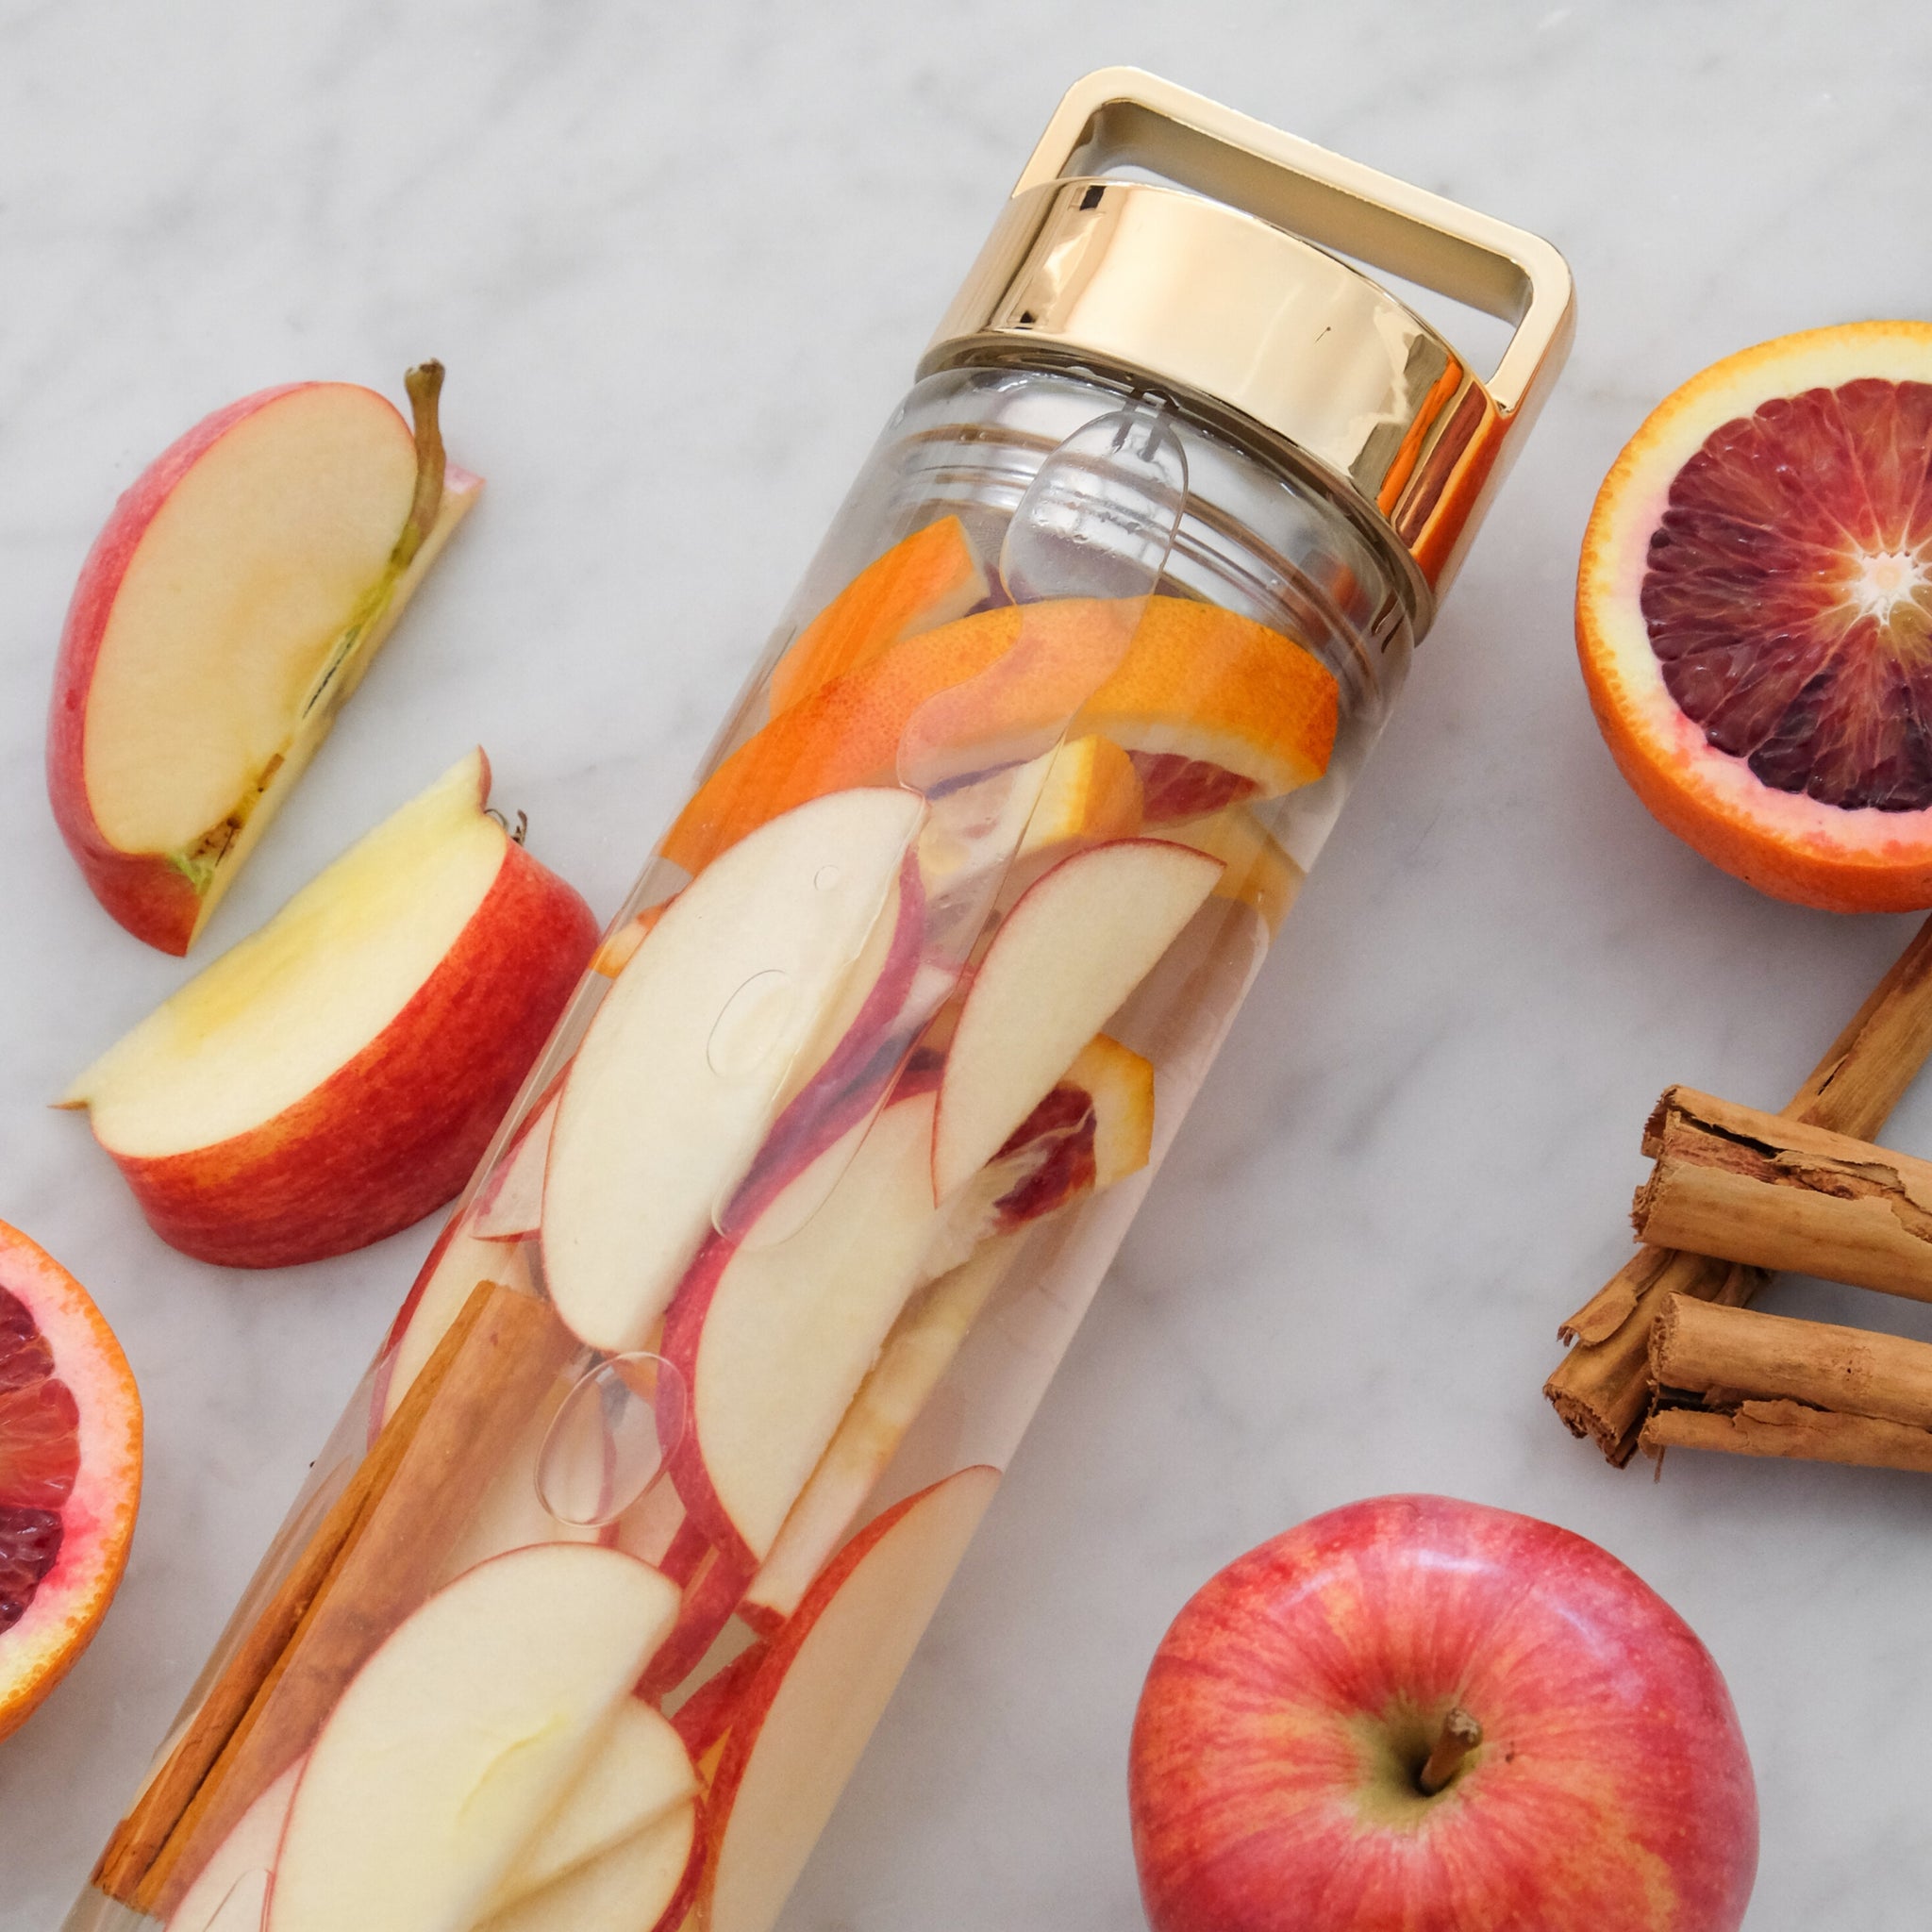 Blood Orange, Apple + Cinnamon Detox Water